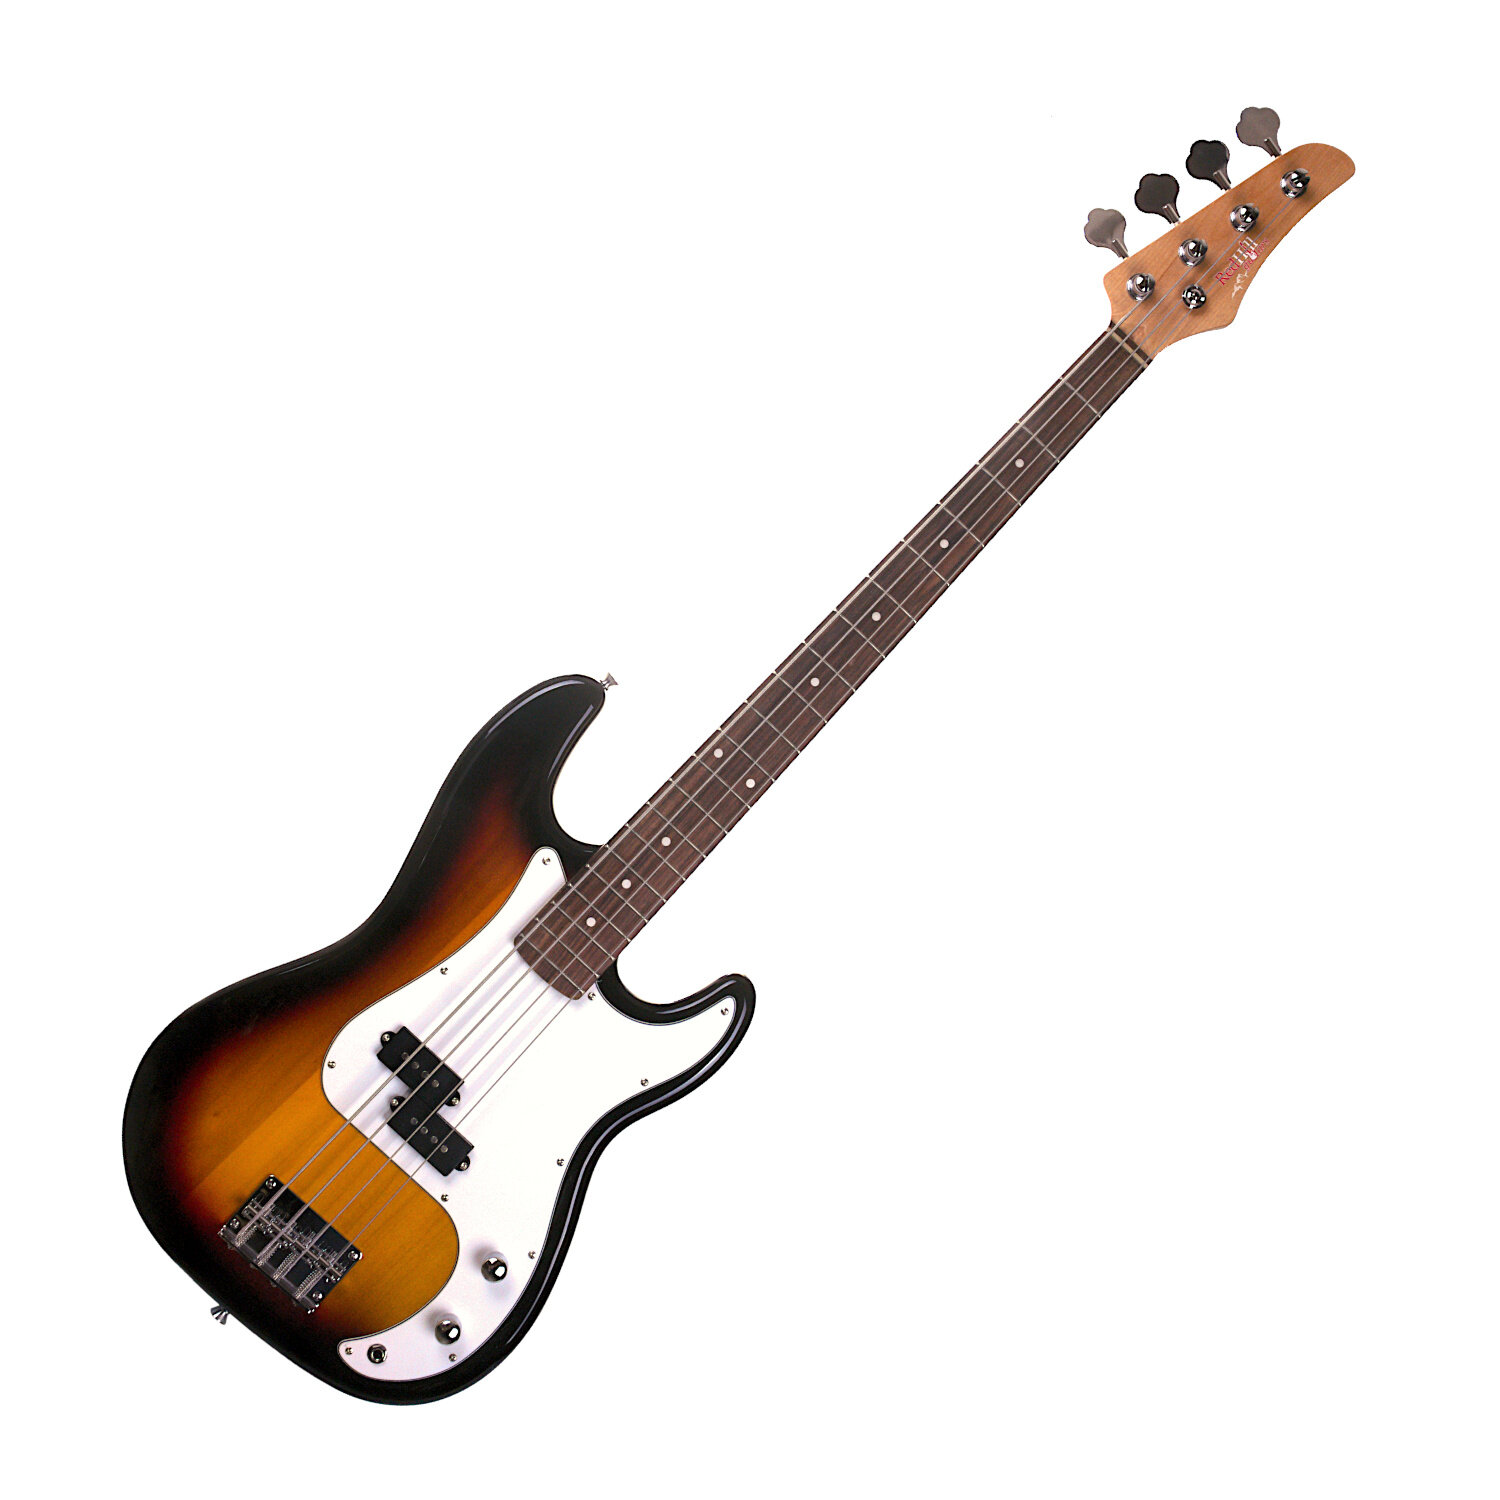 REDHILL PB200/VS бас-гитара 4-стр P+P 864 мм корпус тополь гриф клен цвет санберст